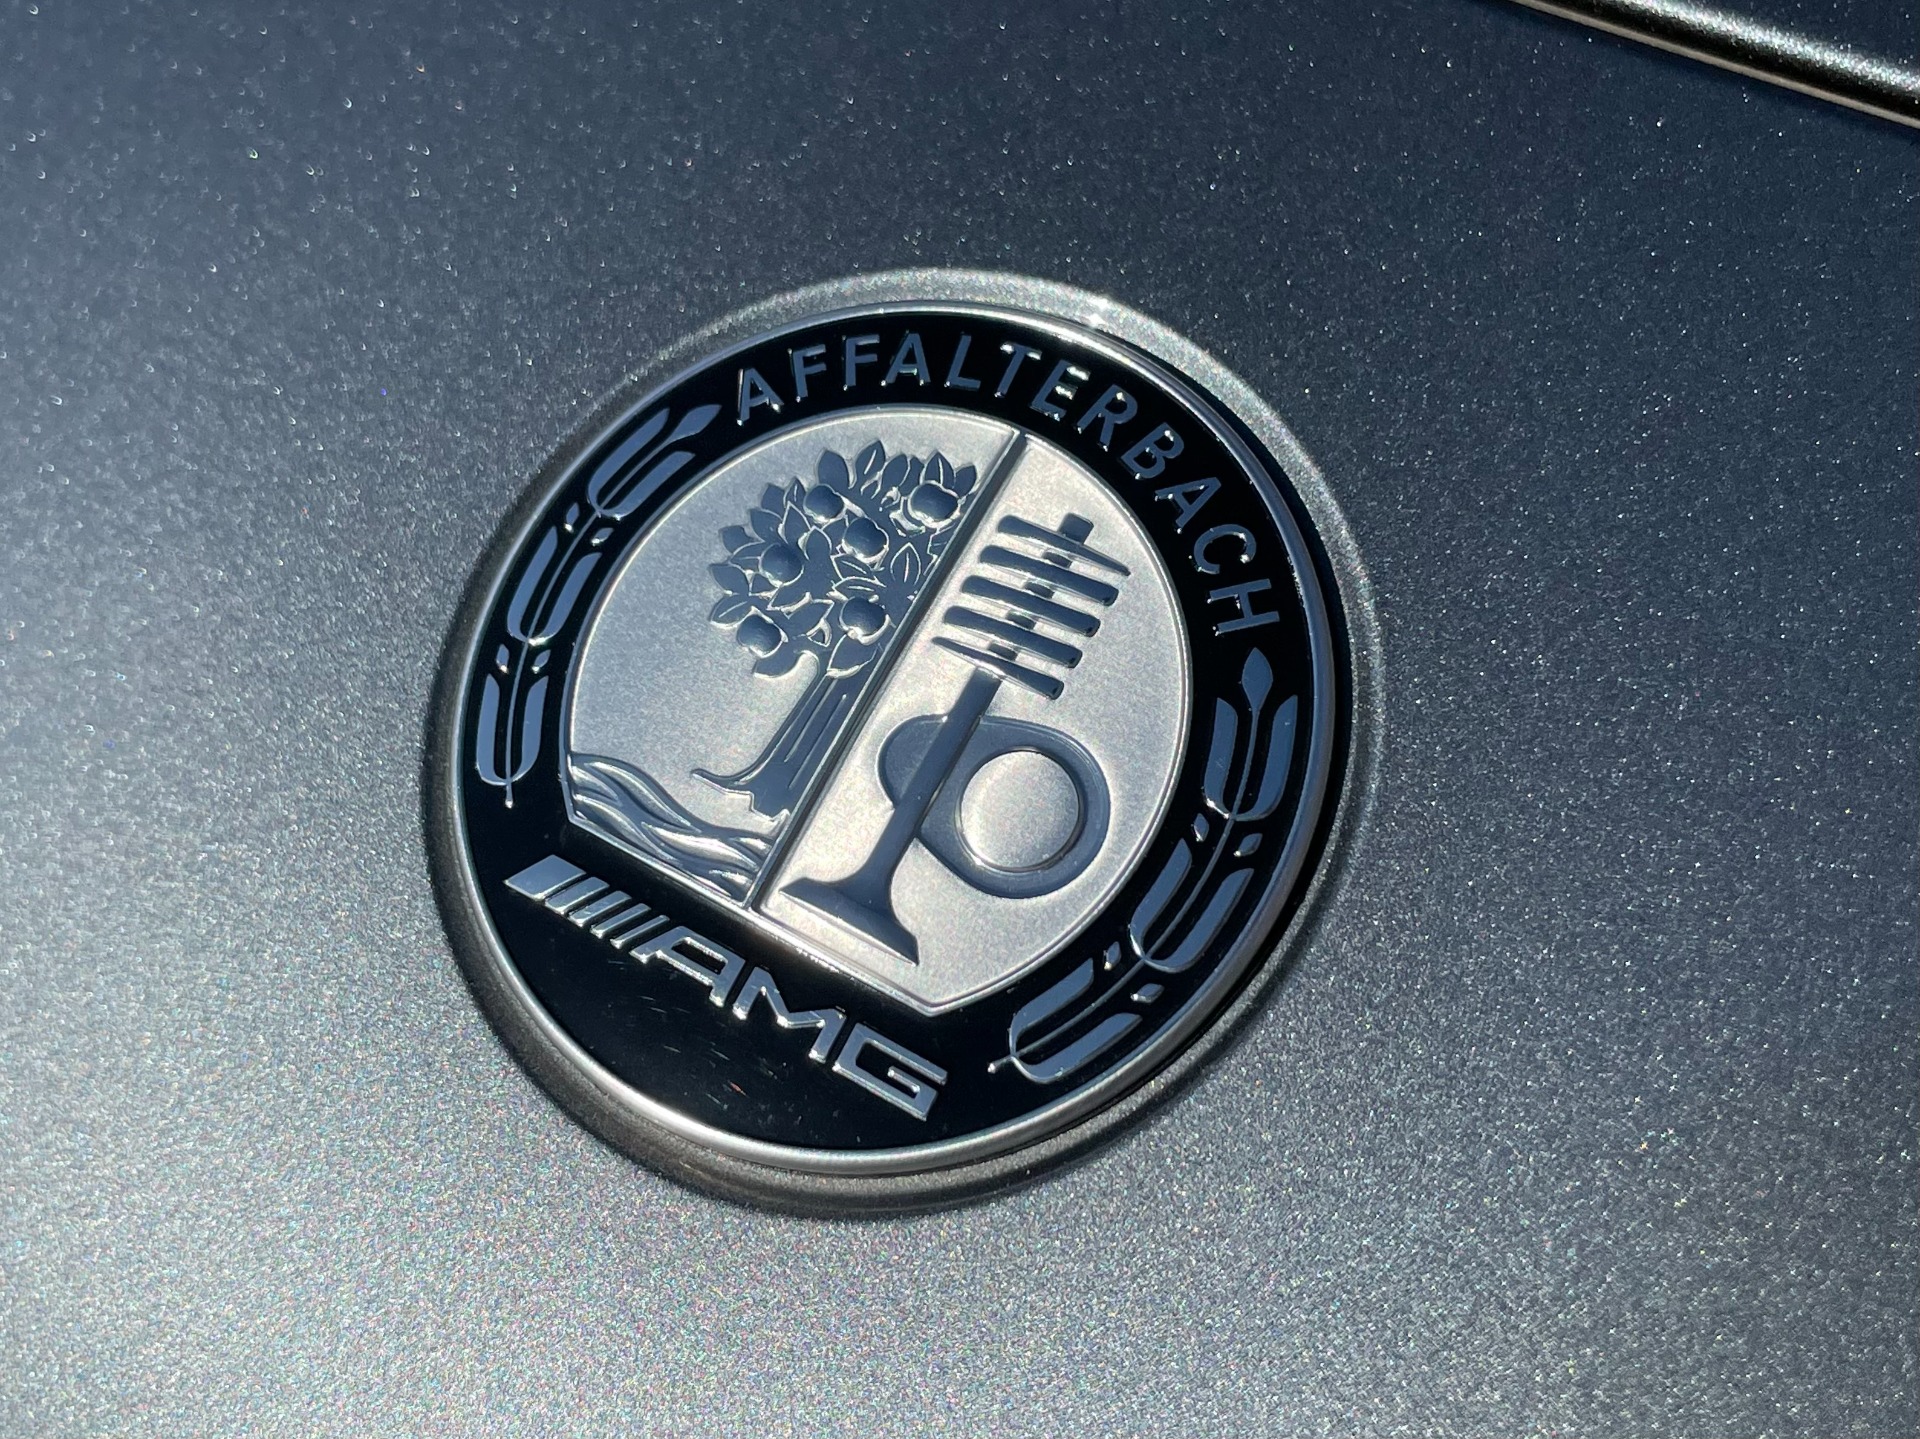 Brabus High Performance Emblem Logo Sticker Original New!